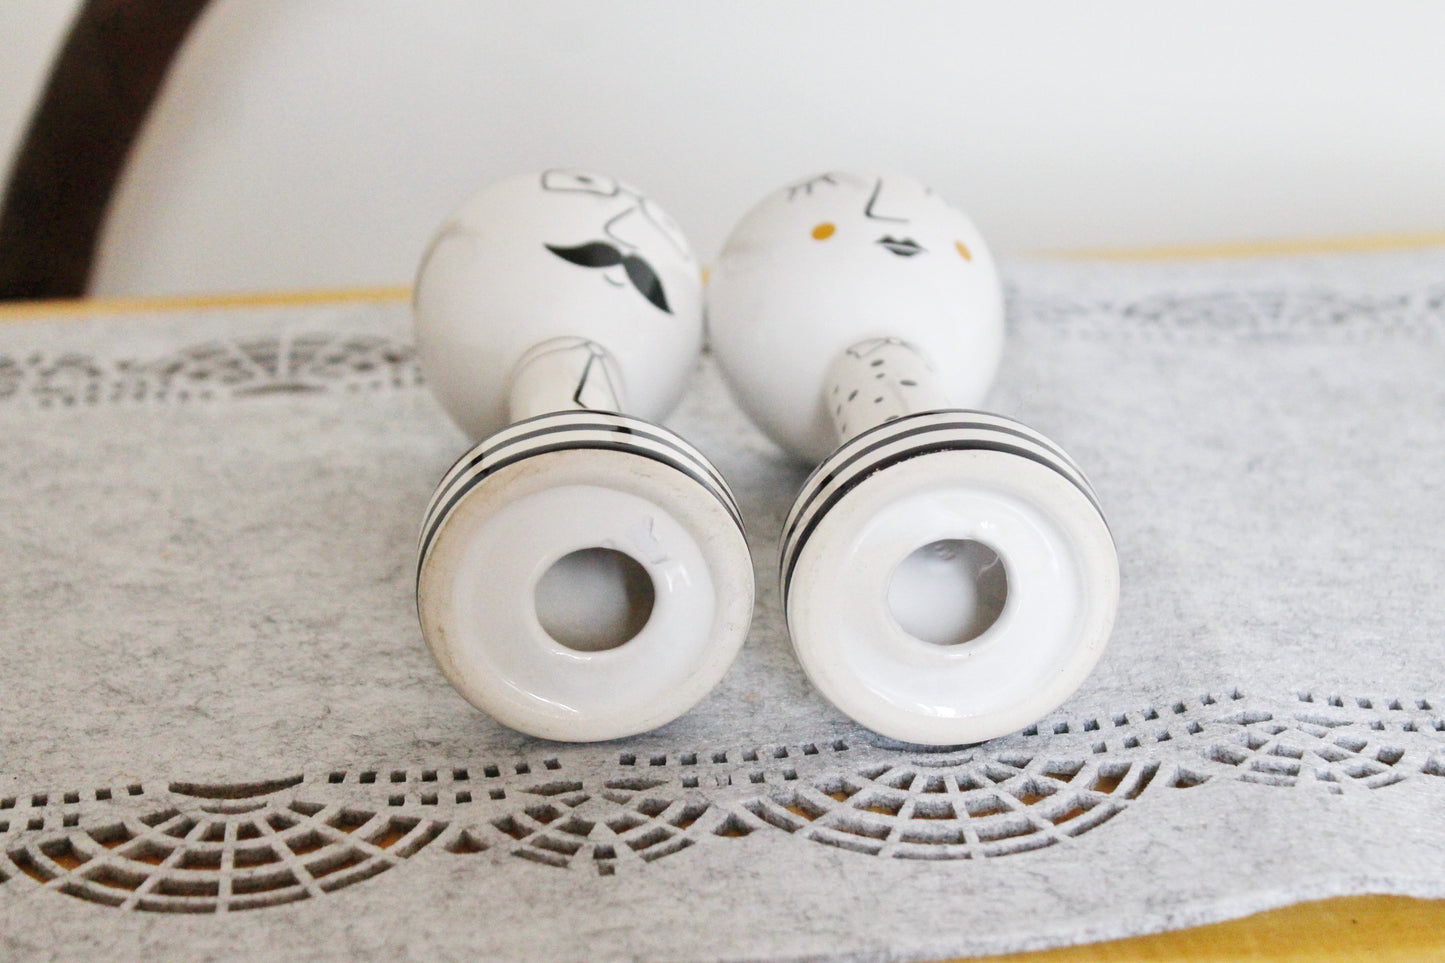 Set of two Vintage porcelain egg holders - 5.5 inches - Vintage Germany ceramic egg stand - 2000s